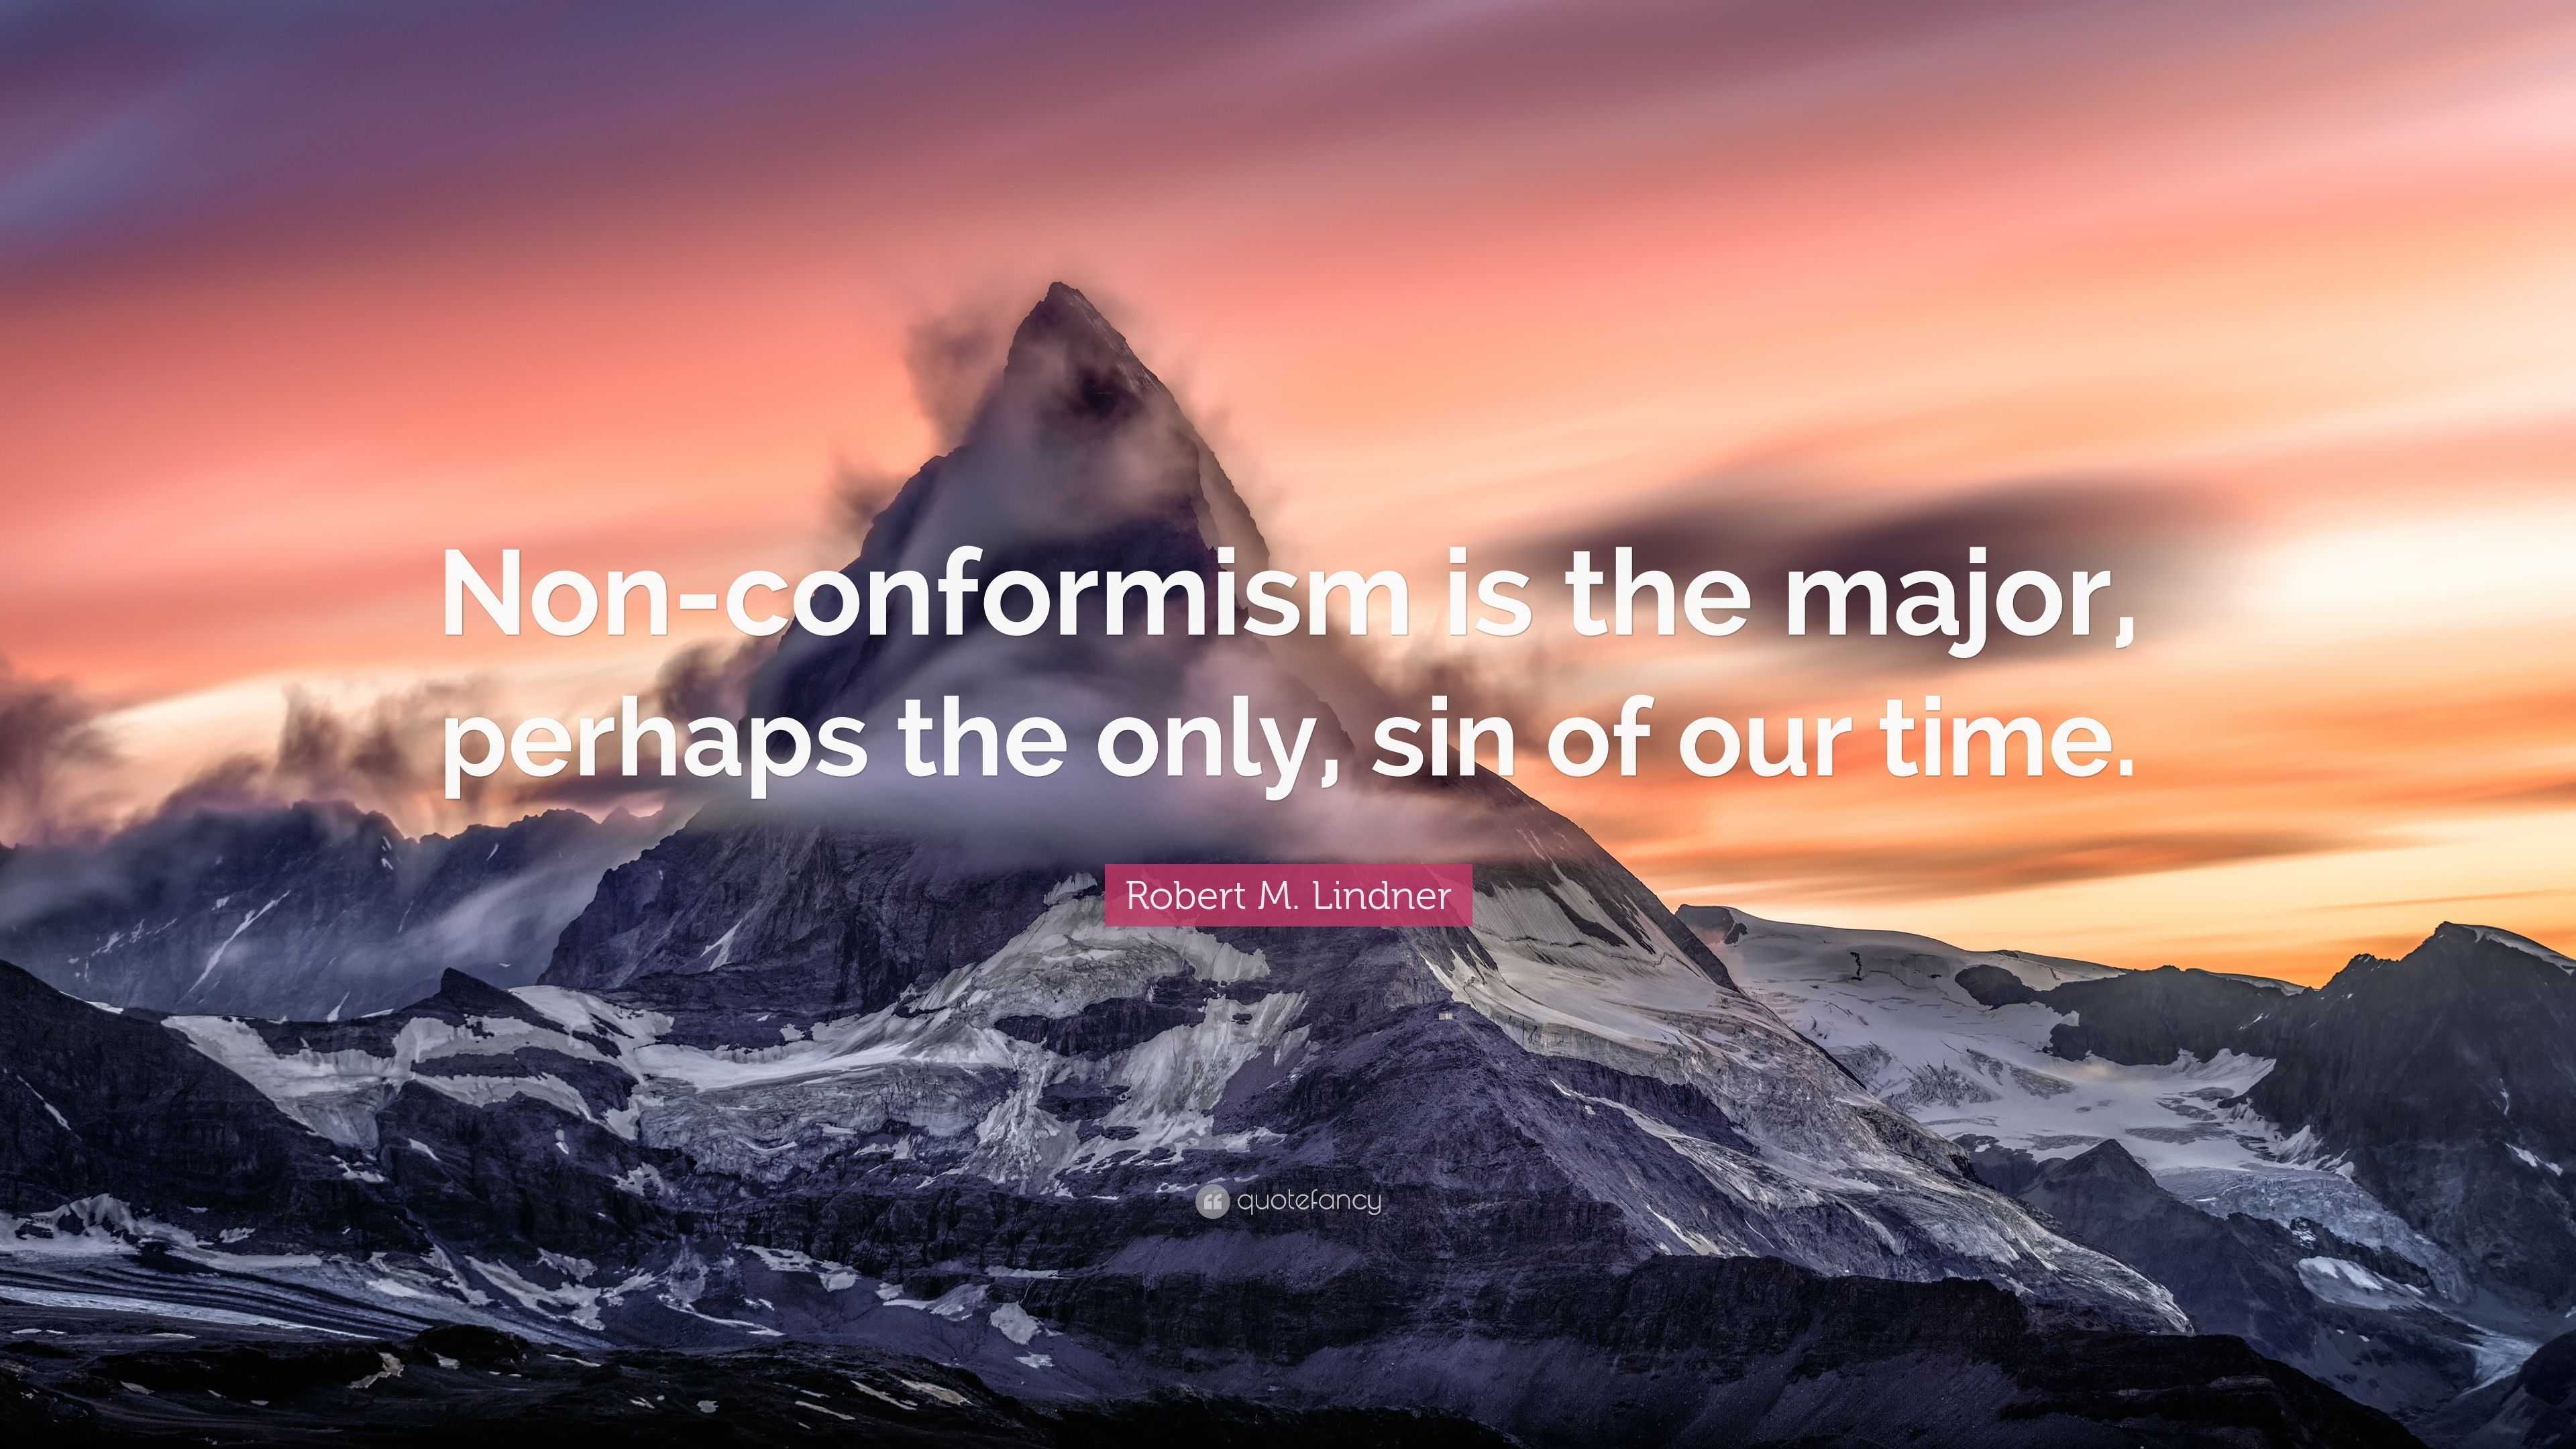 Robert M. Lindner Quote: “Non-conformism is the major